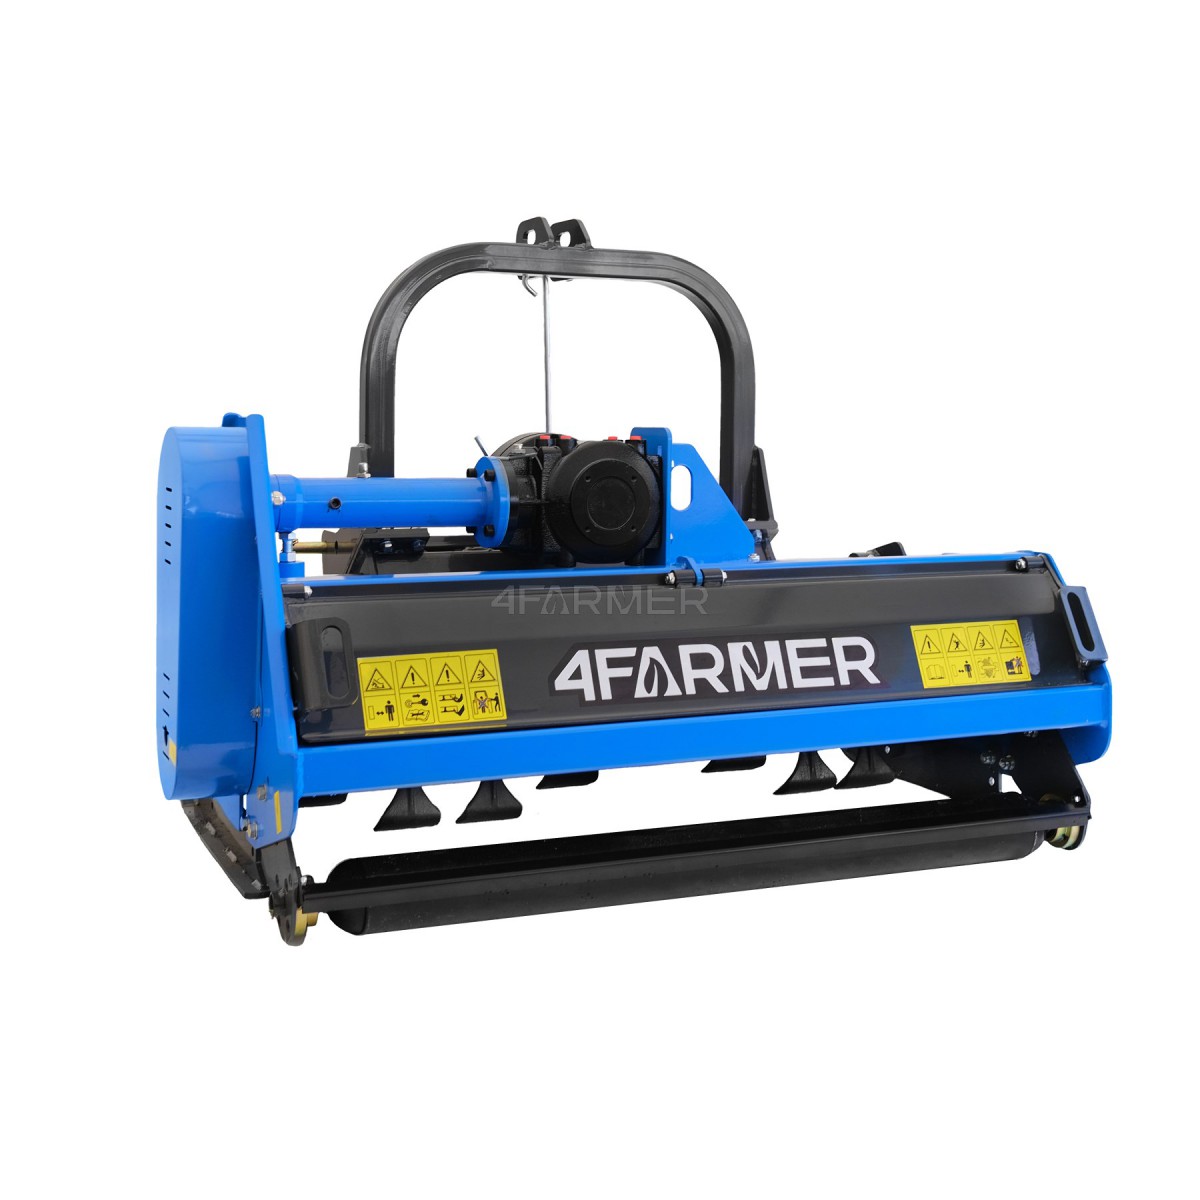 EFGCH 165D 4FARMER flail mower - blue